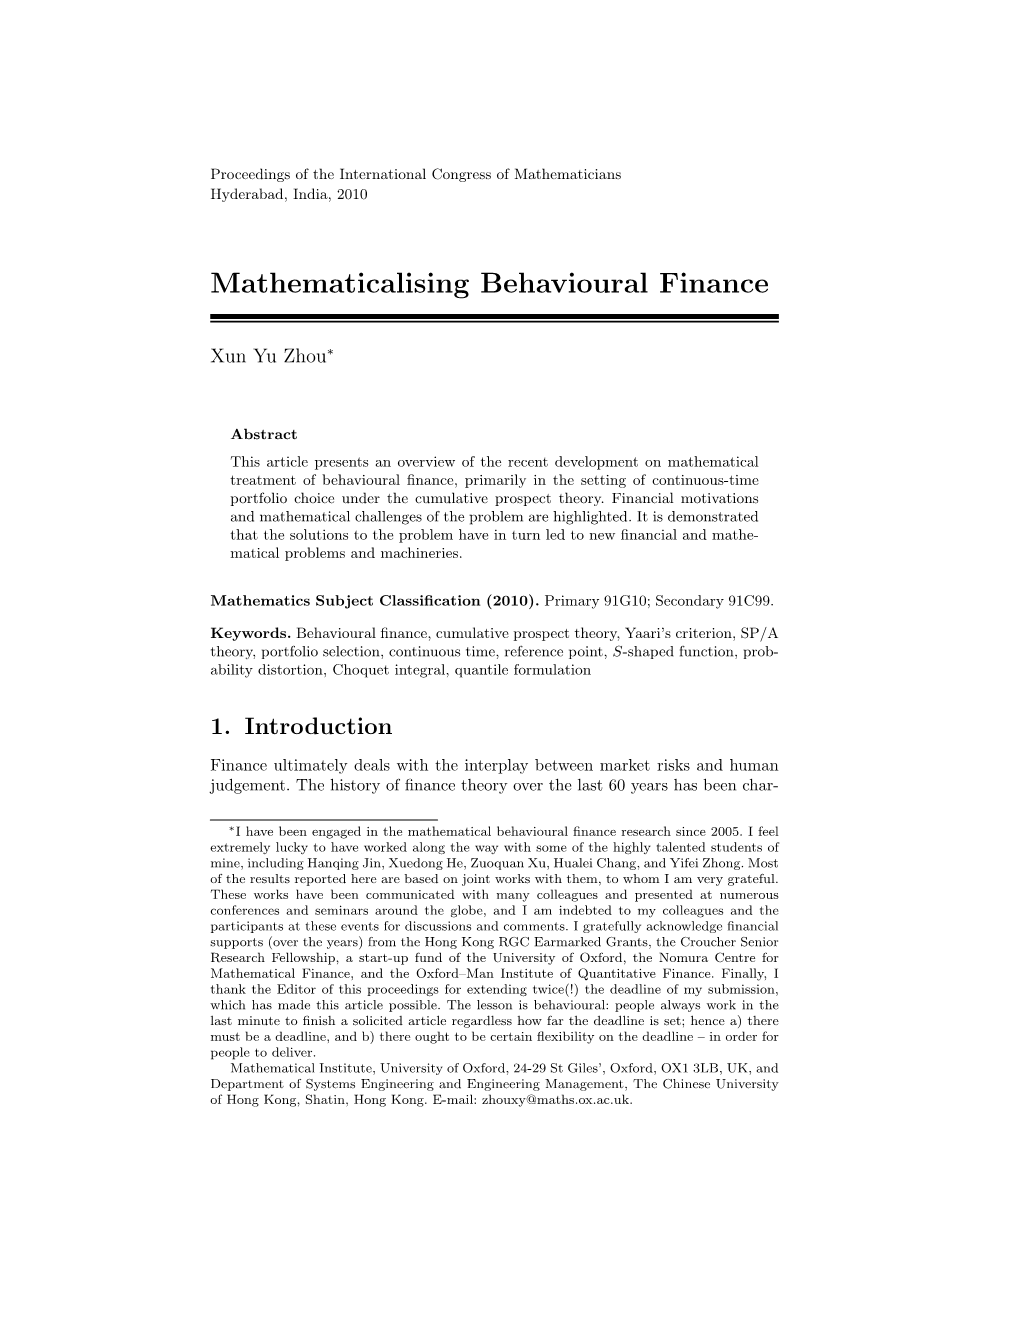 Mathematicalising Behavioural Finance